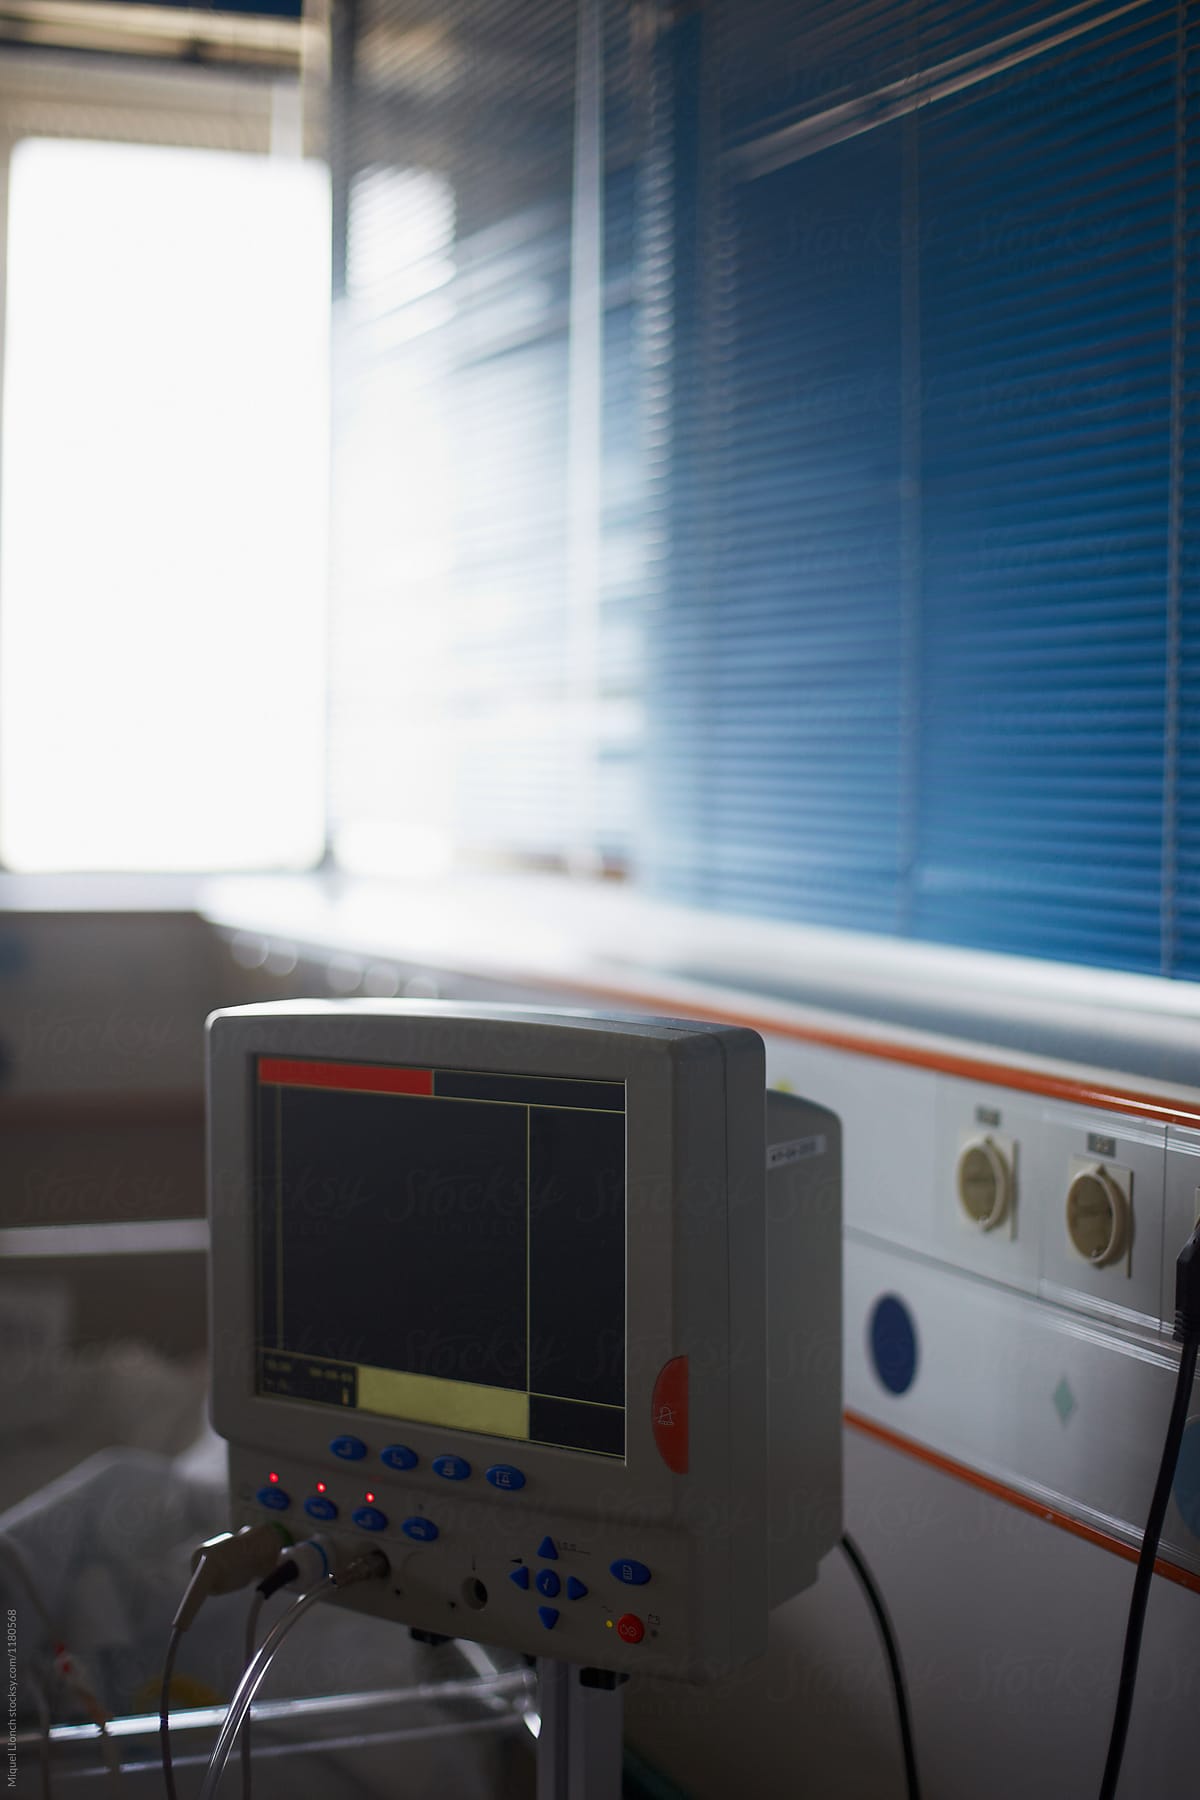 Hospital monitor for control of newborns